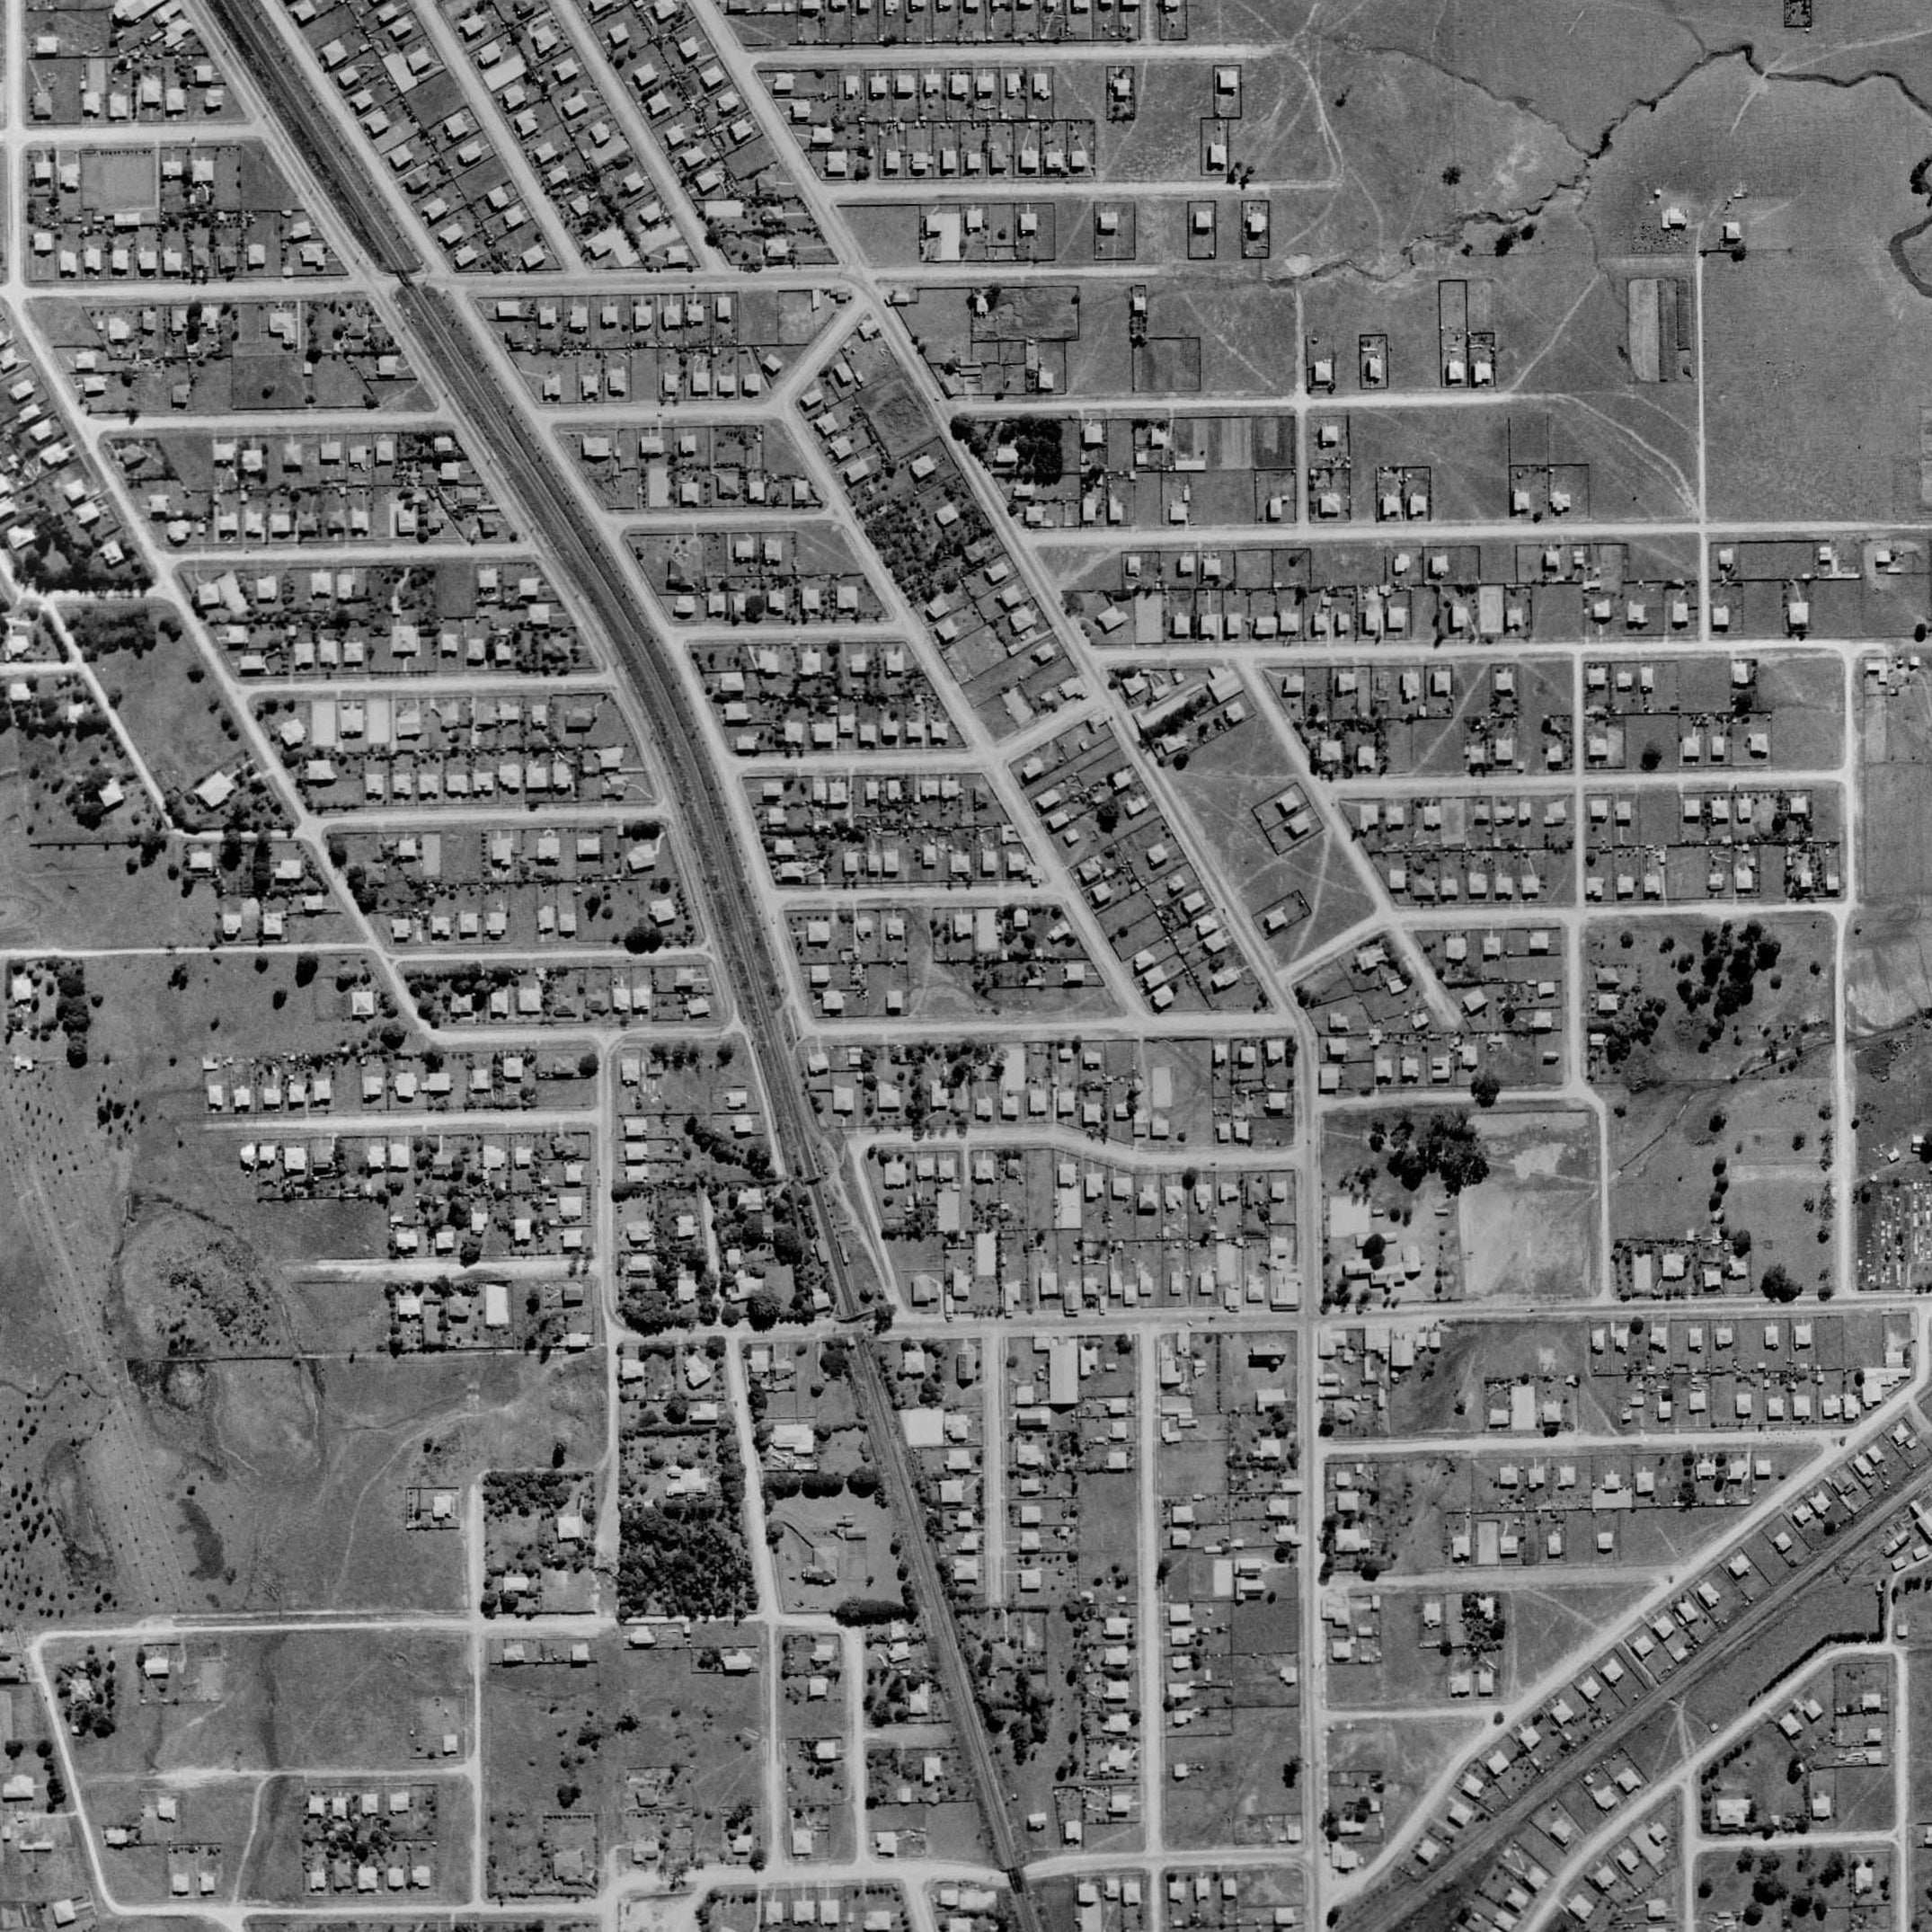 1936 Sherwood - Aerial Photo - Sherwood Road